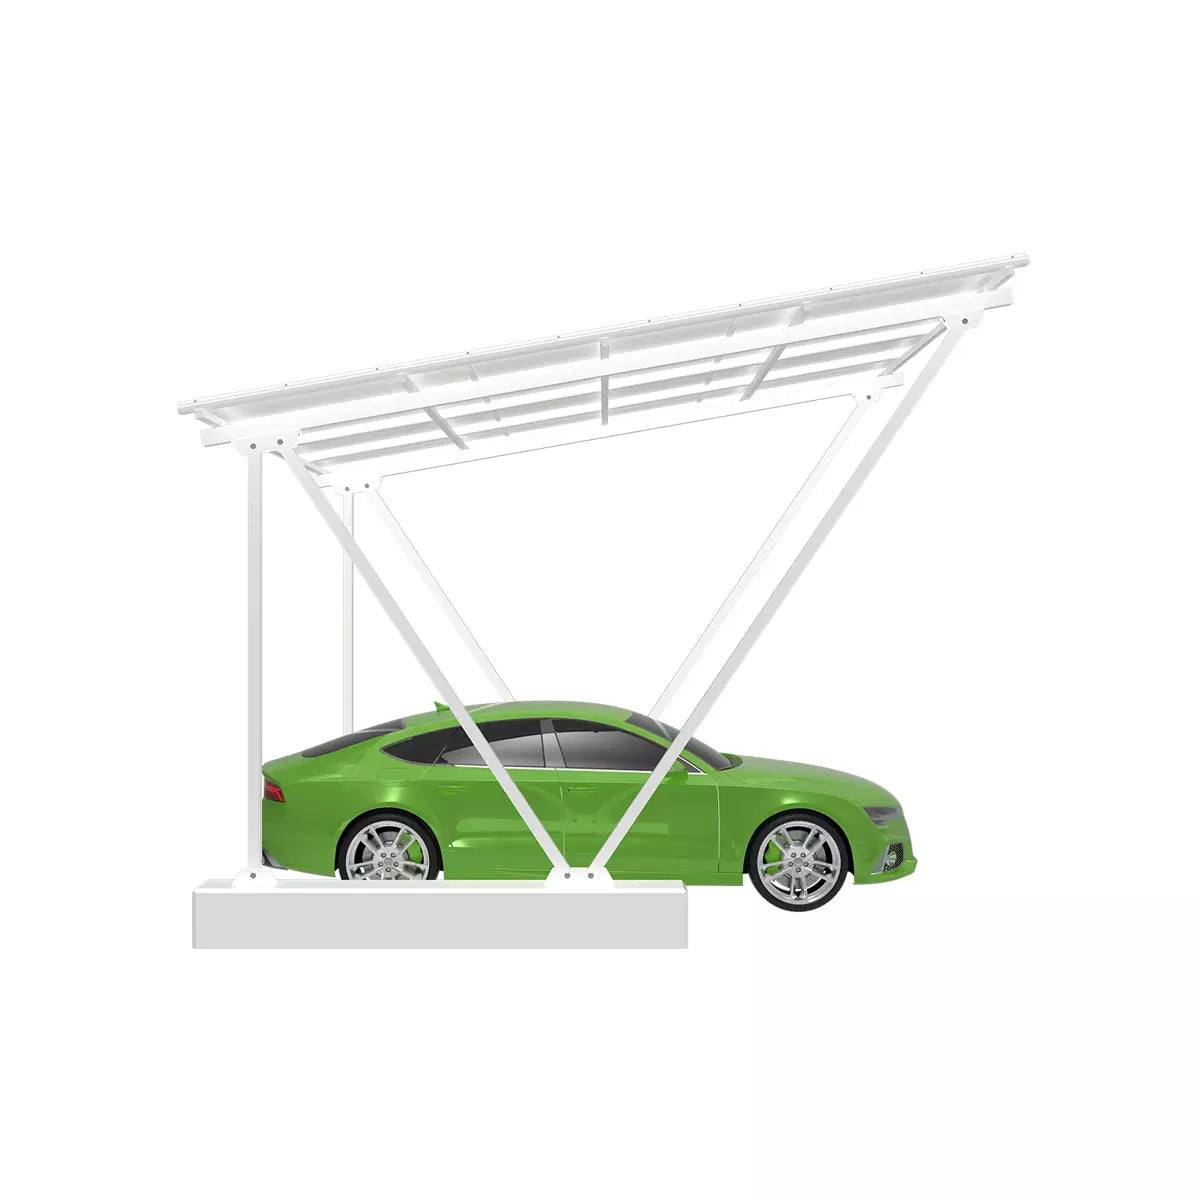 Servotech to install solar-plus-storage carport with EV charging